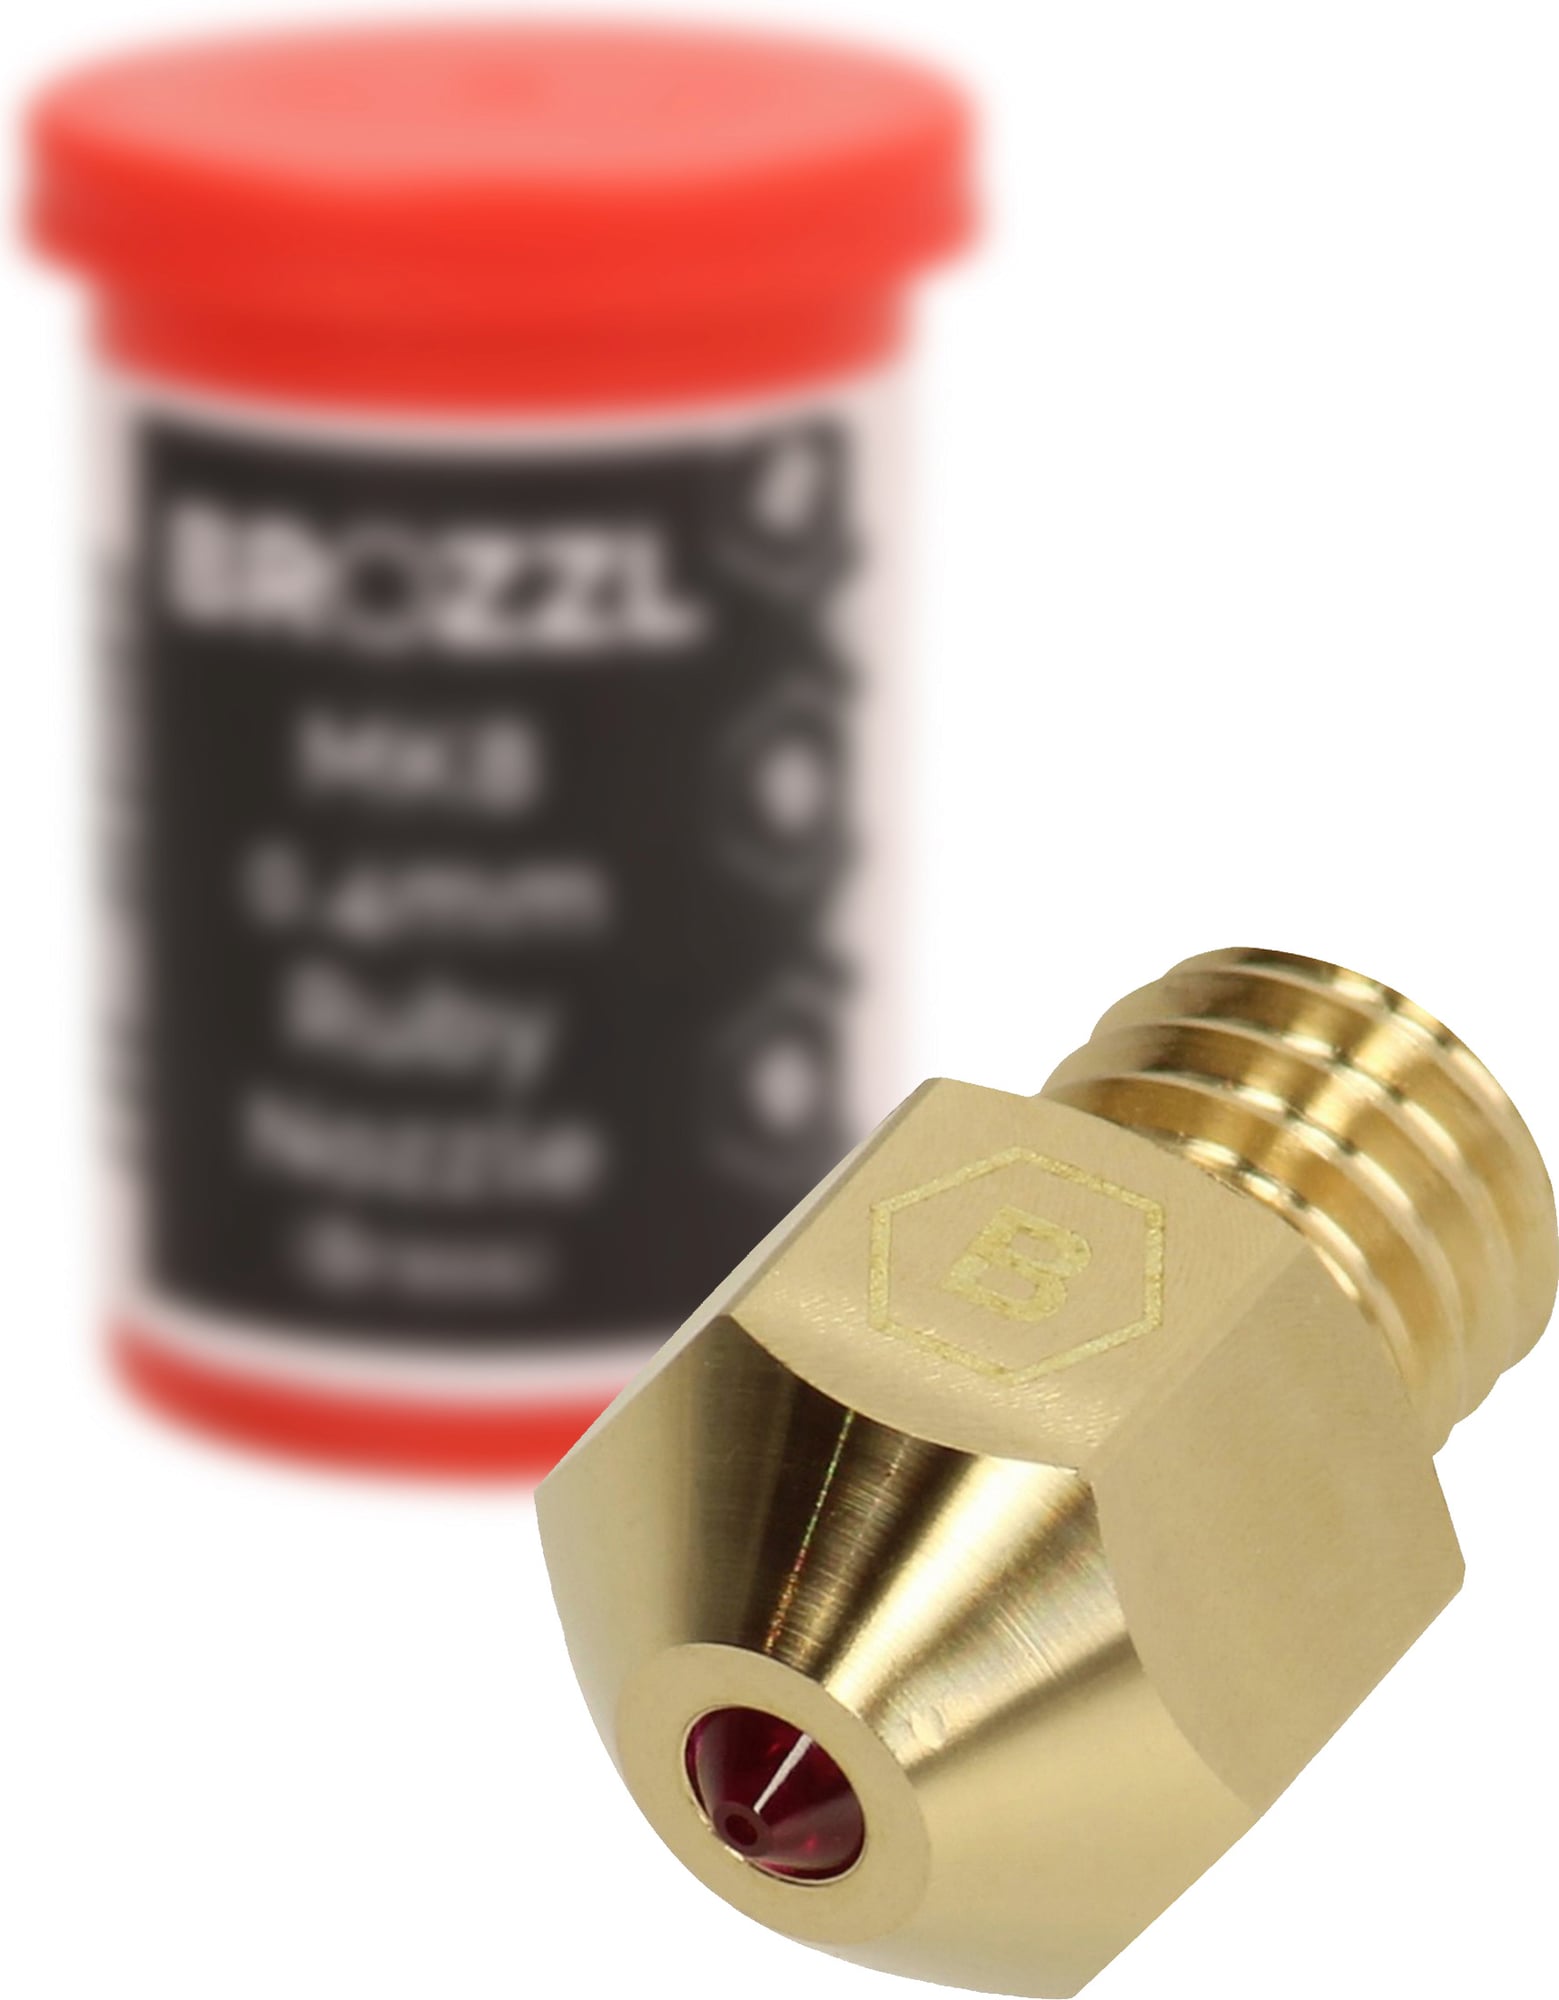 MK8 Düse Ruby Nozzle von Brozzl | z.B. passend für Creality Ender 3, Ender 3 Pro | 0,4mm-0,8mm